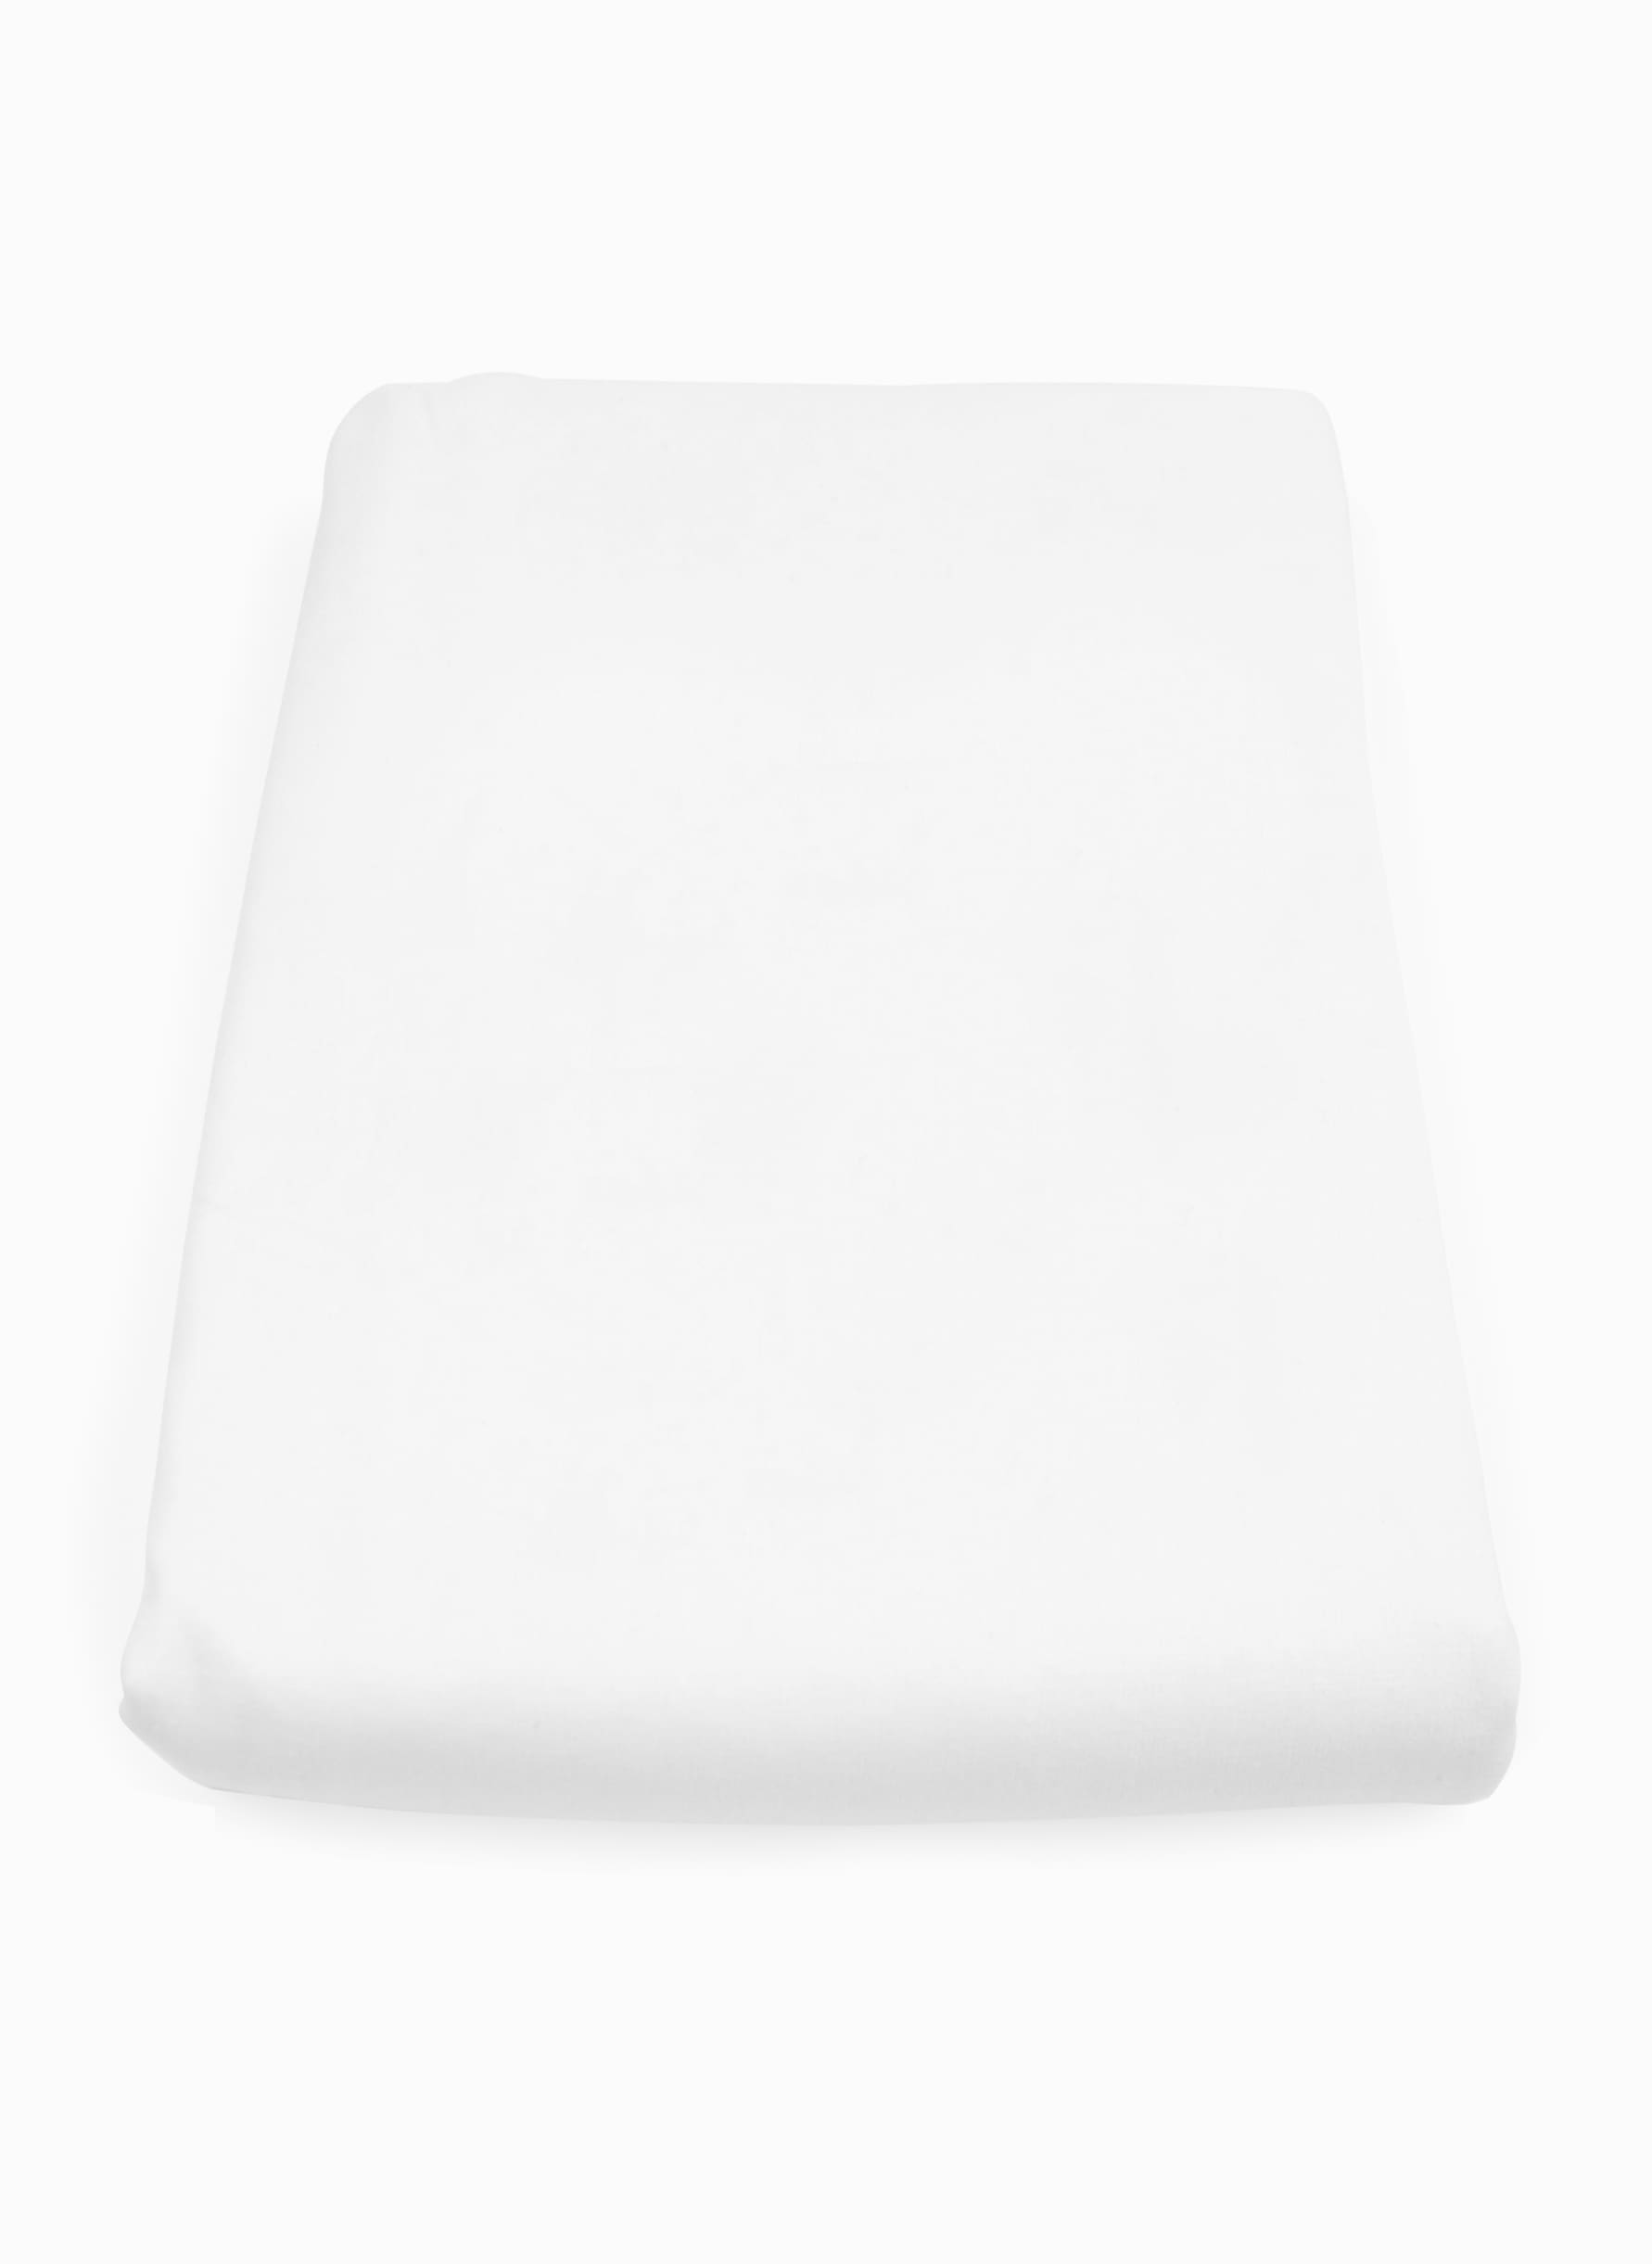 Silk sheets white